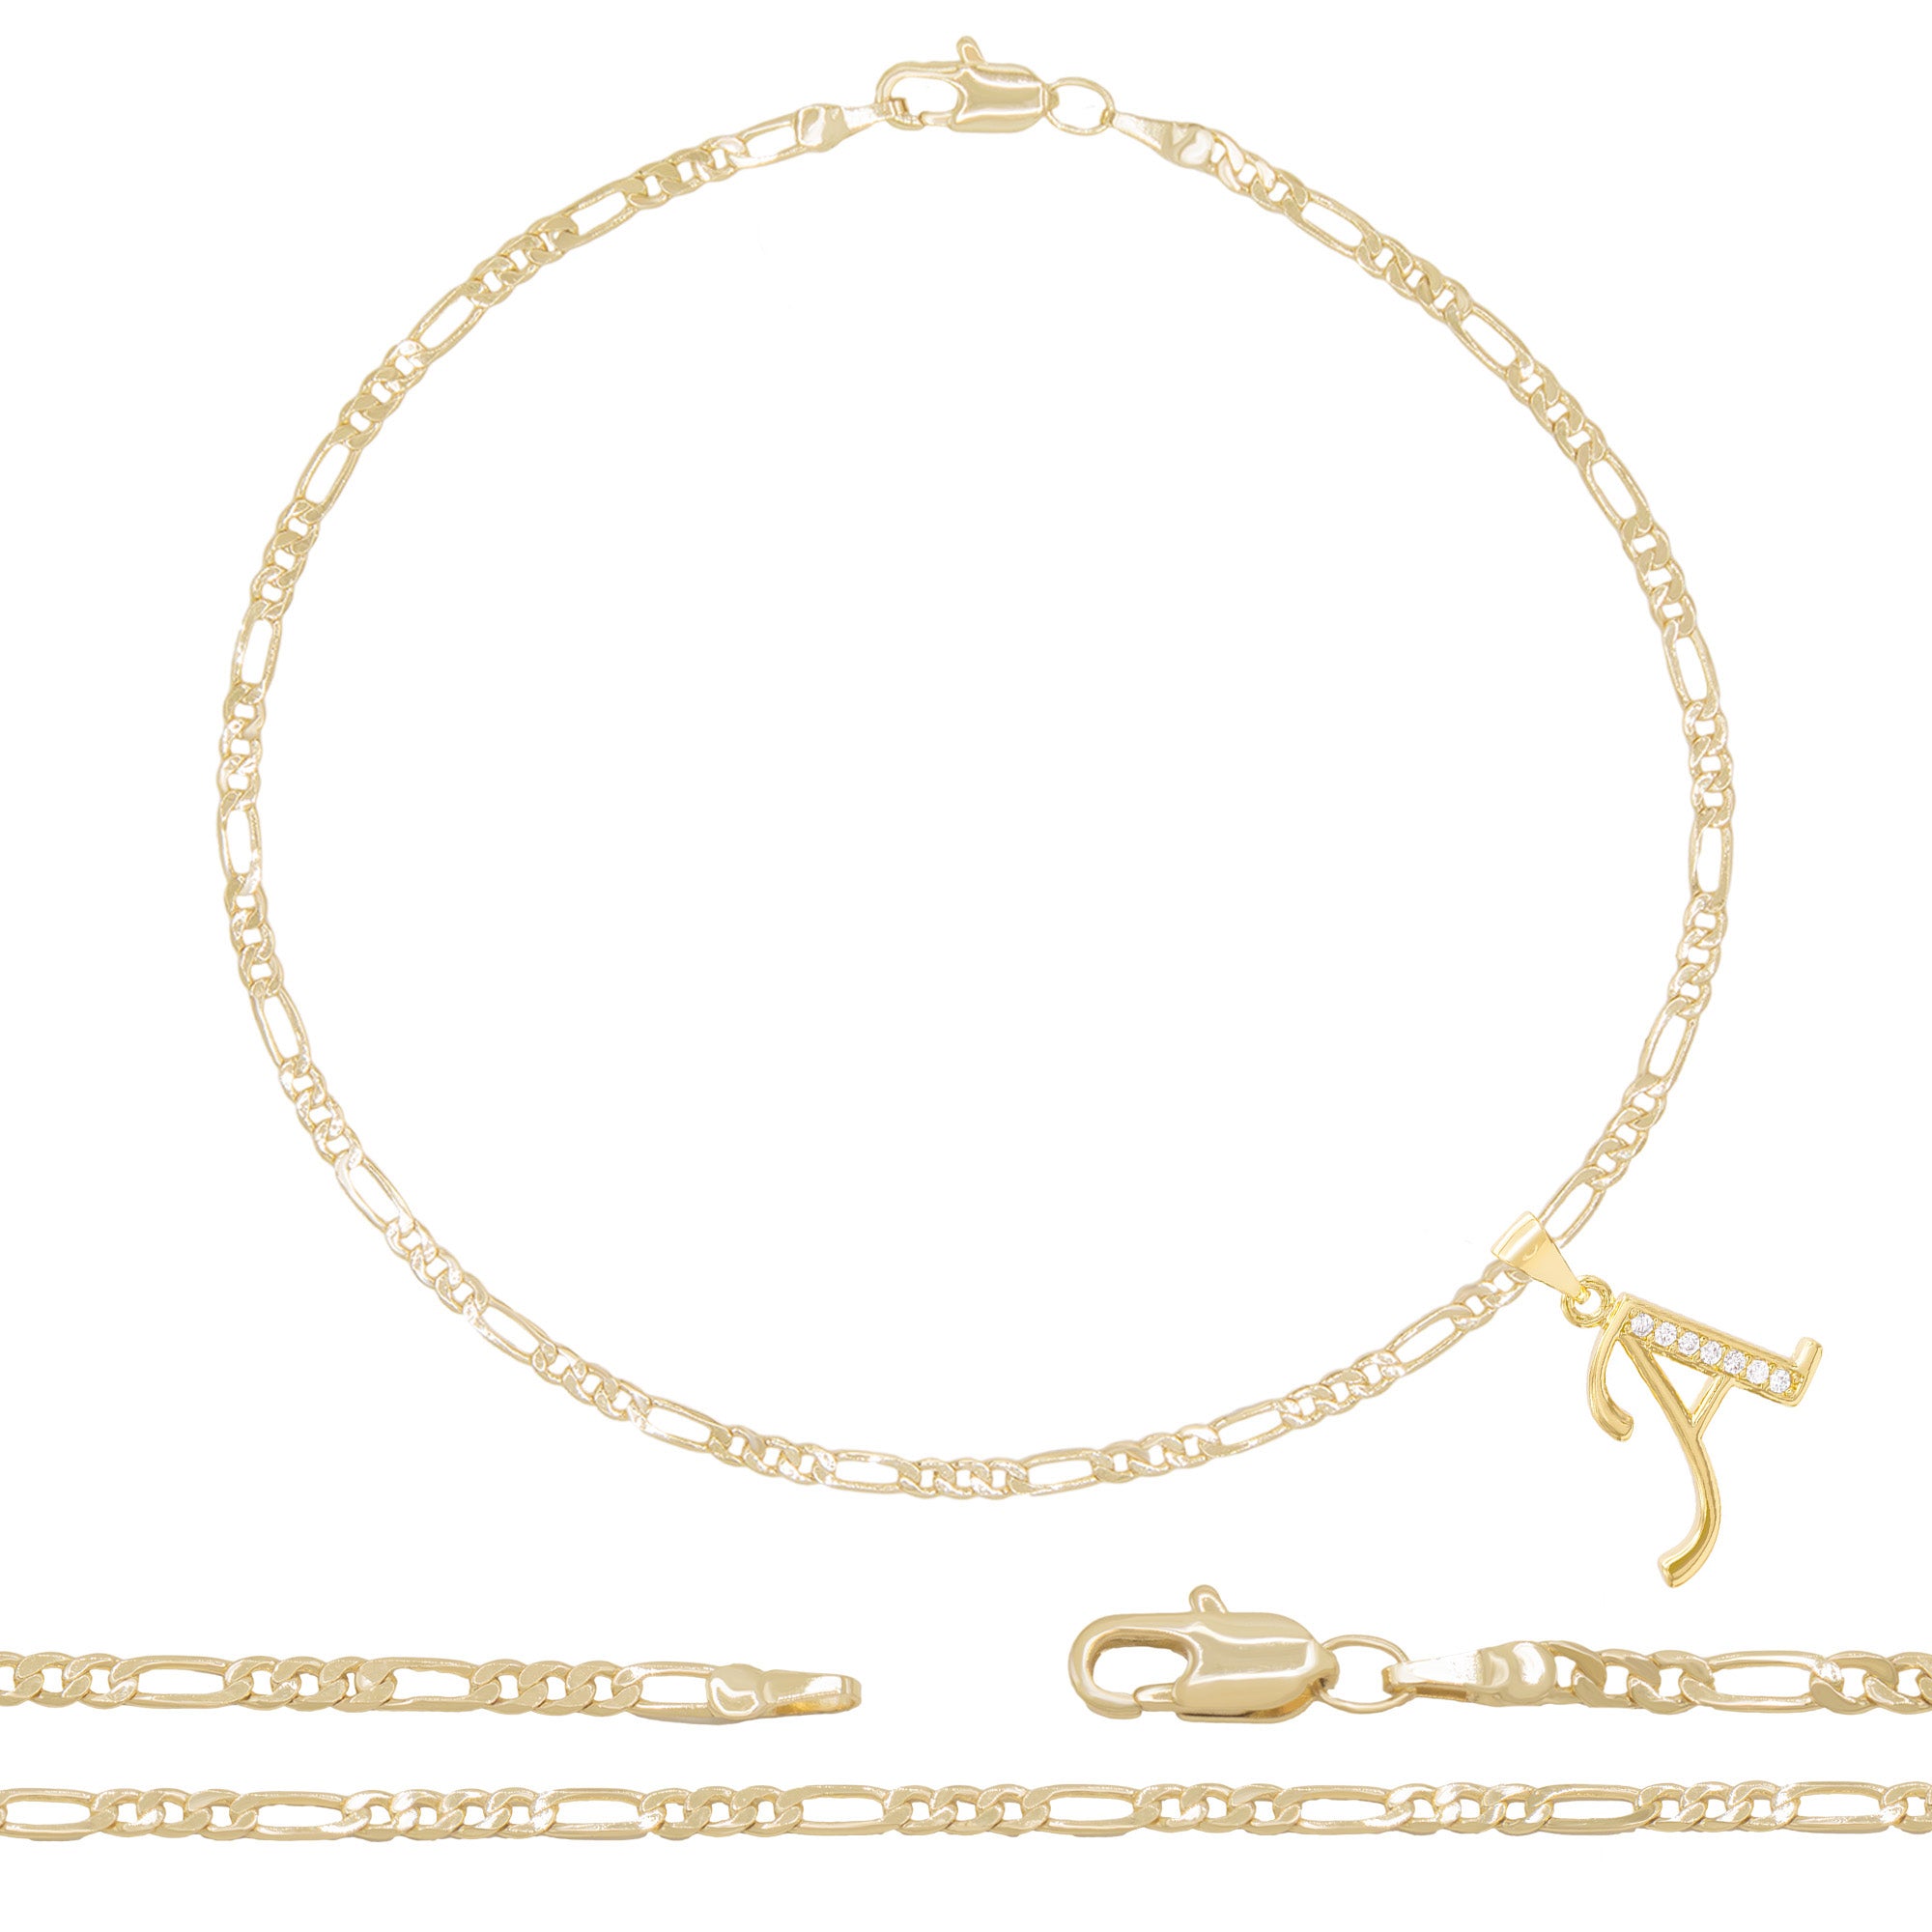 Personalized monogram bracelet or anklet with Figaro chain in Sterling  Silver or solid karat gold: 10K, 14K or 18K.